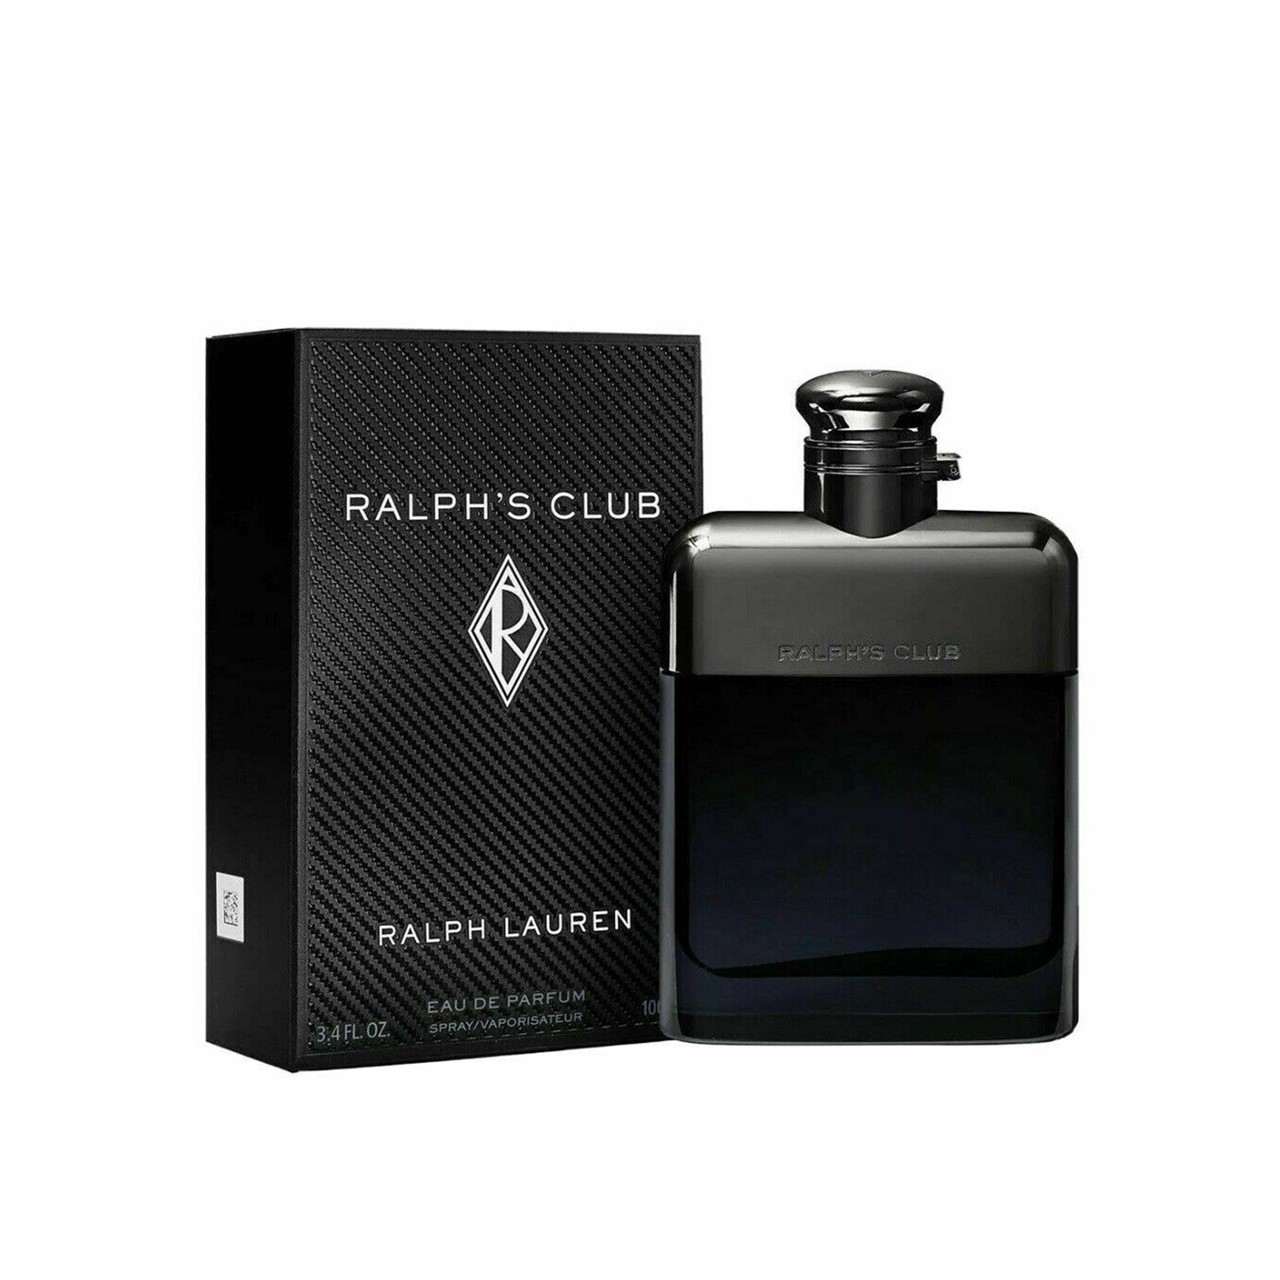 Ralph Lauren Ralph's Club Eau de Parfum For Men